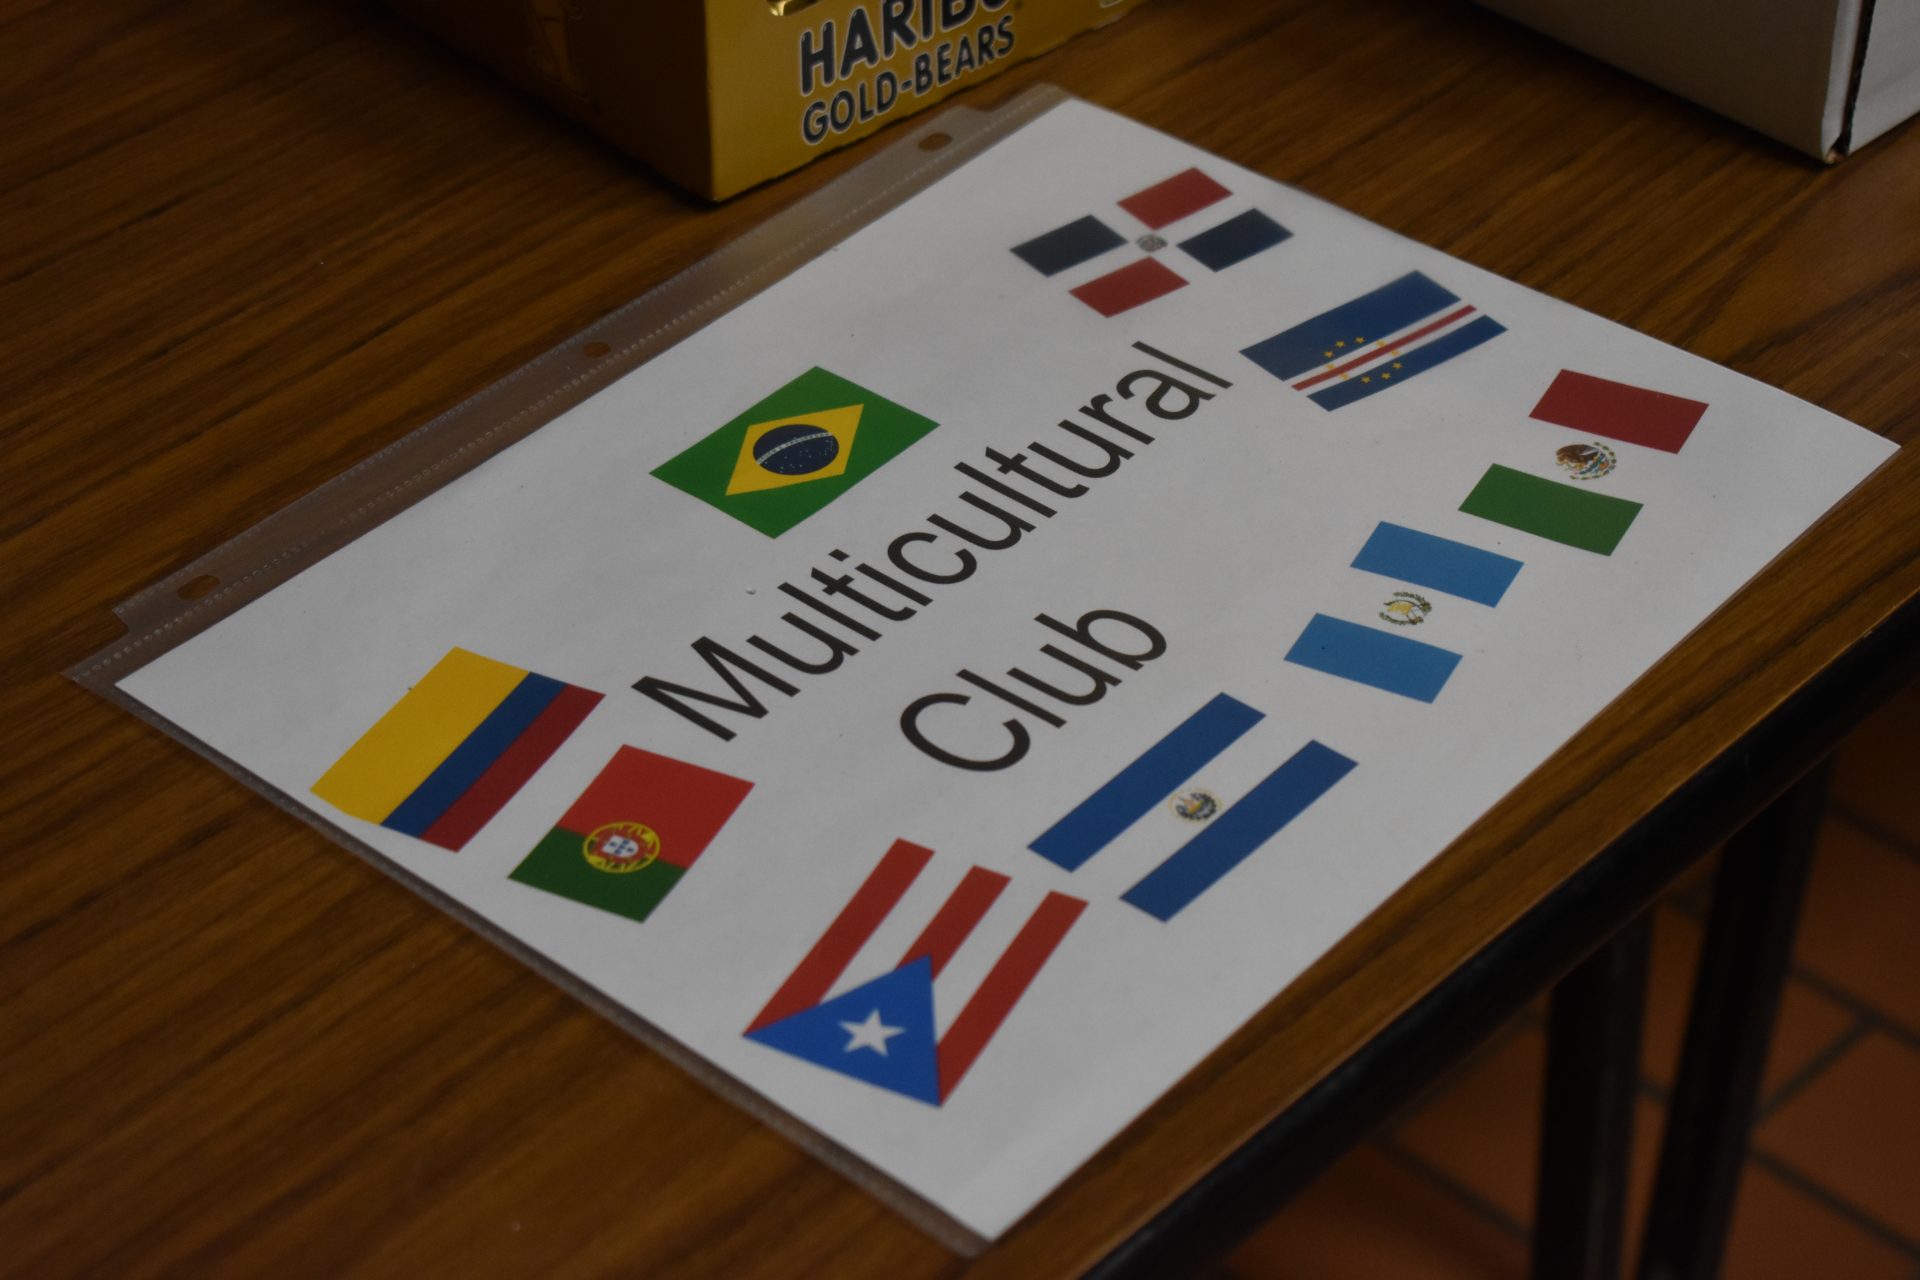 Multicultural Club